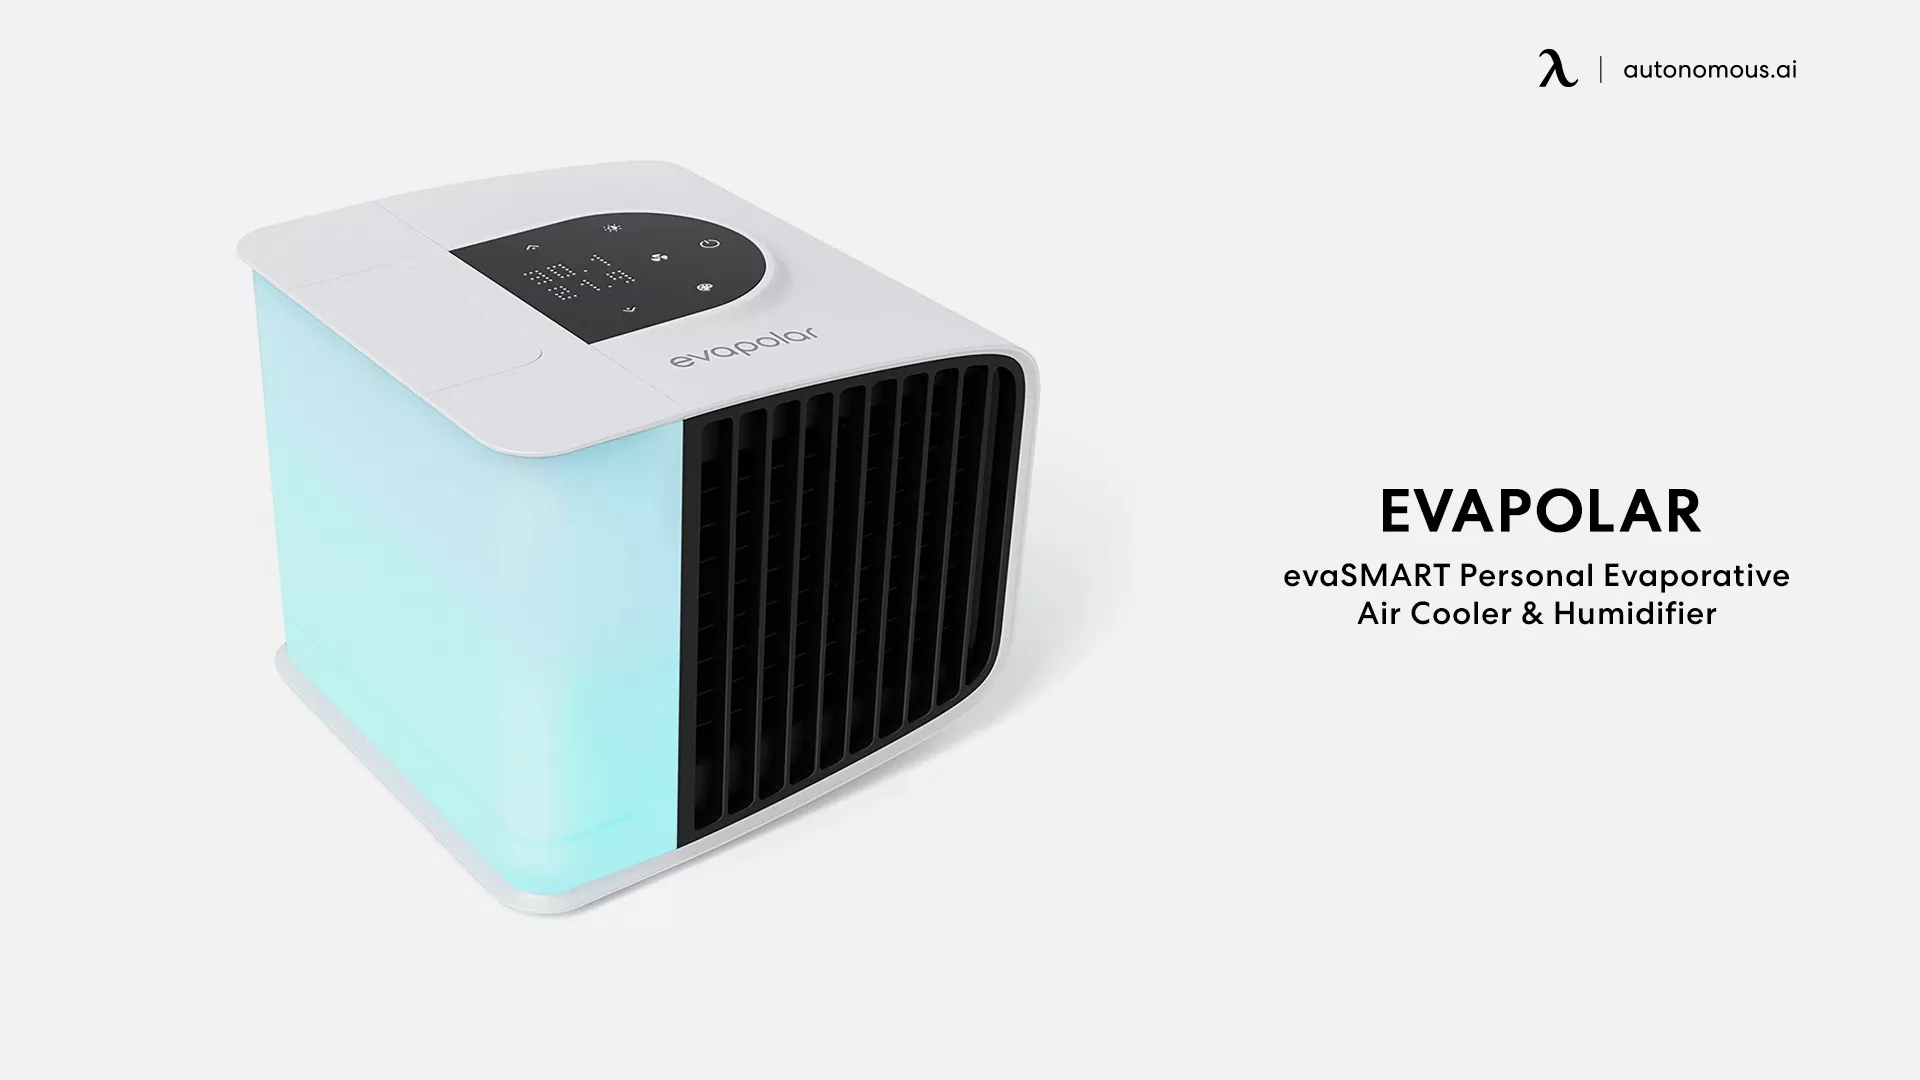 Evapolar evaSMART Personal Evaporative Air Cooler & Humidifier